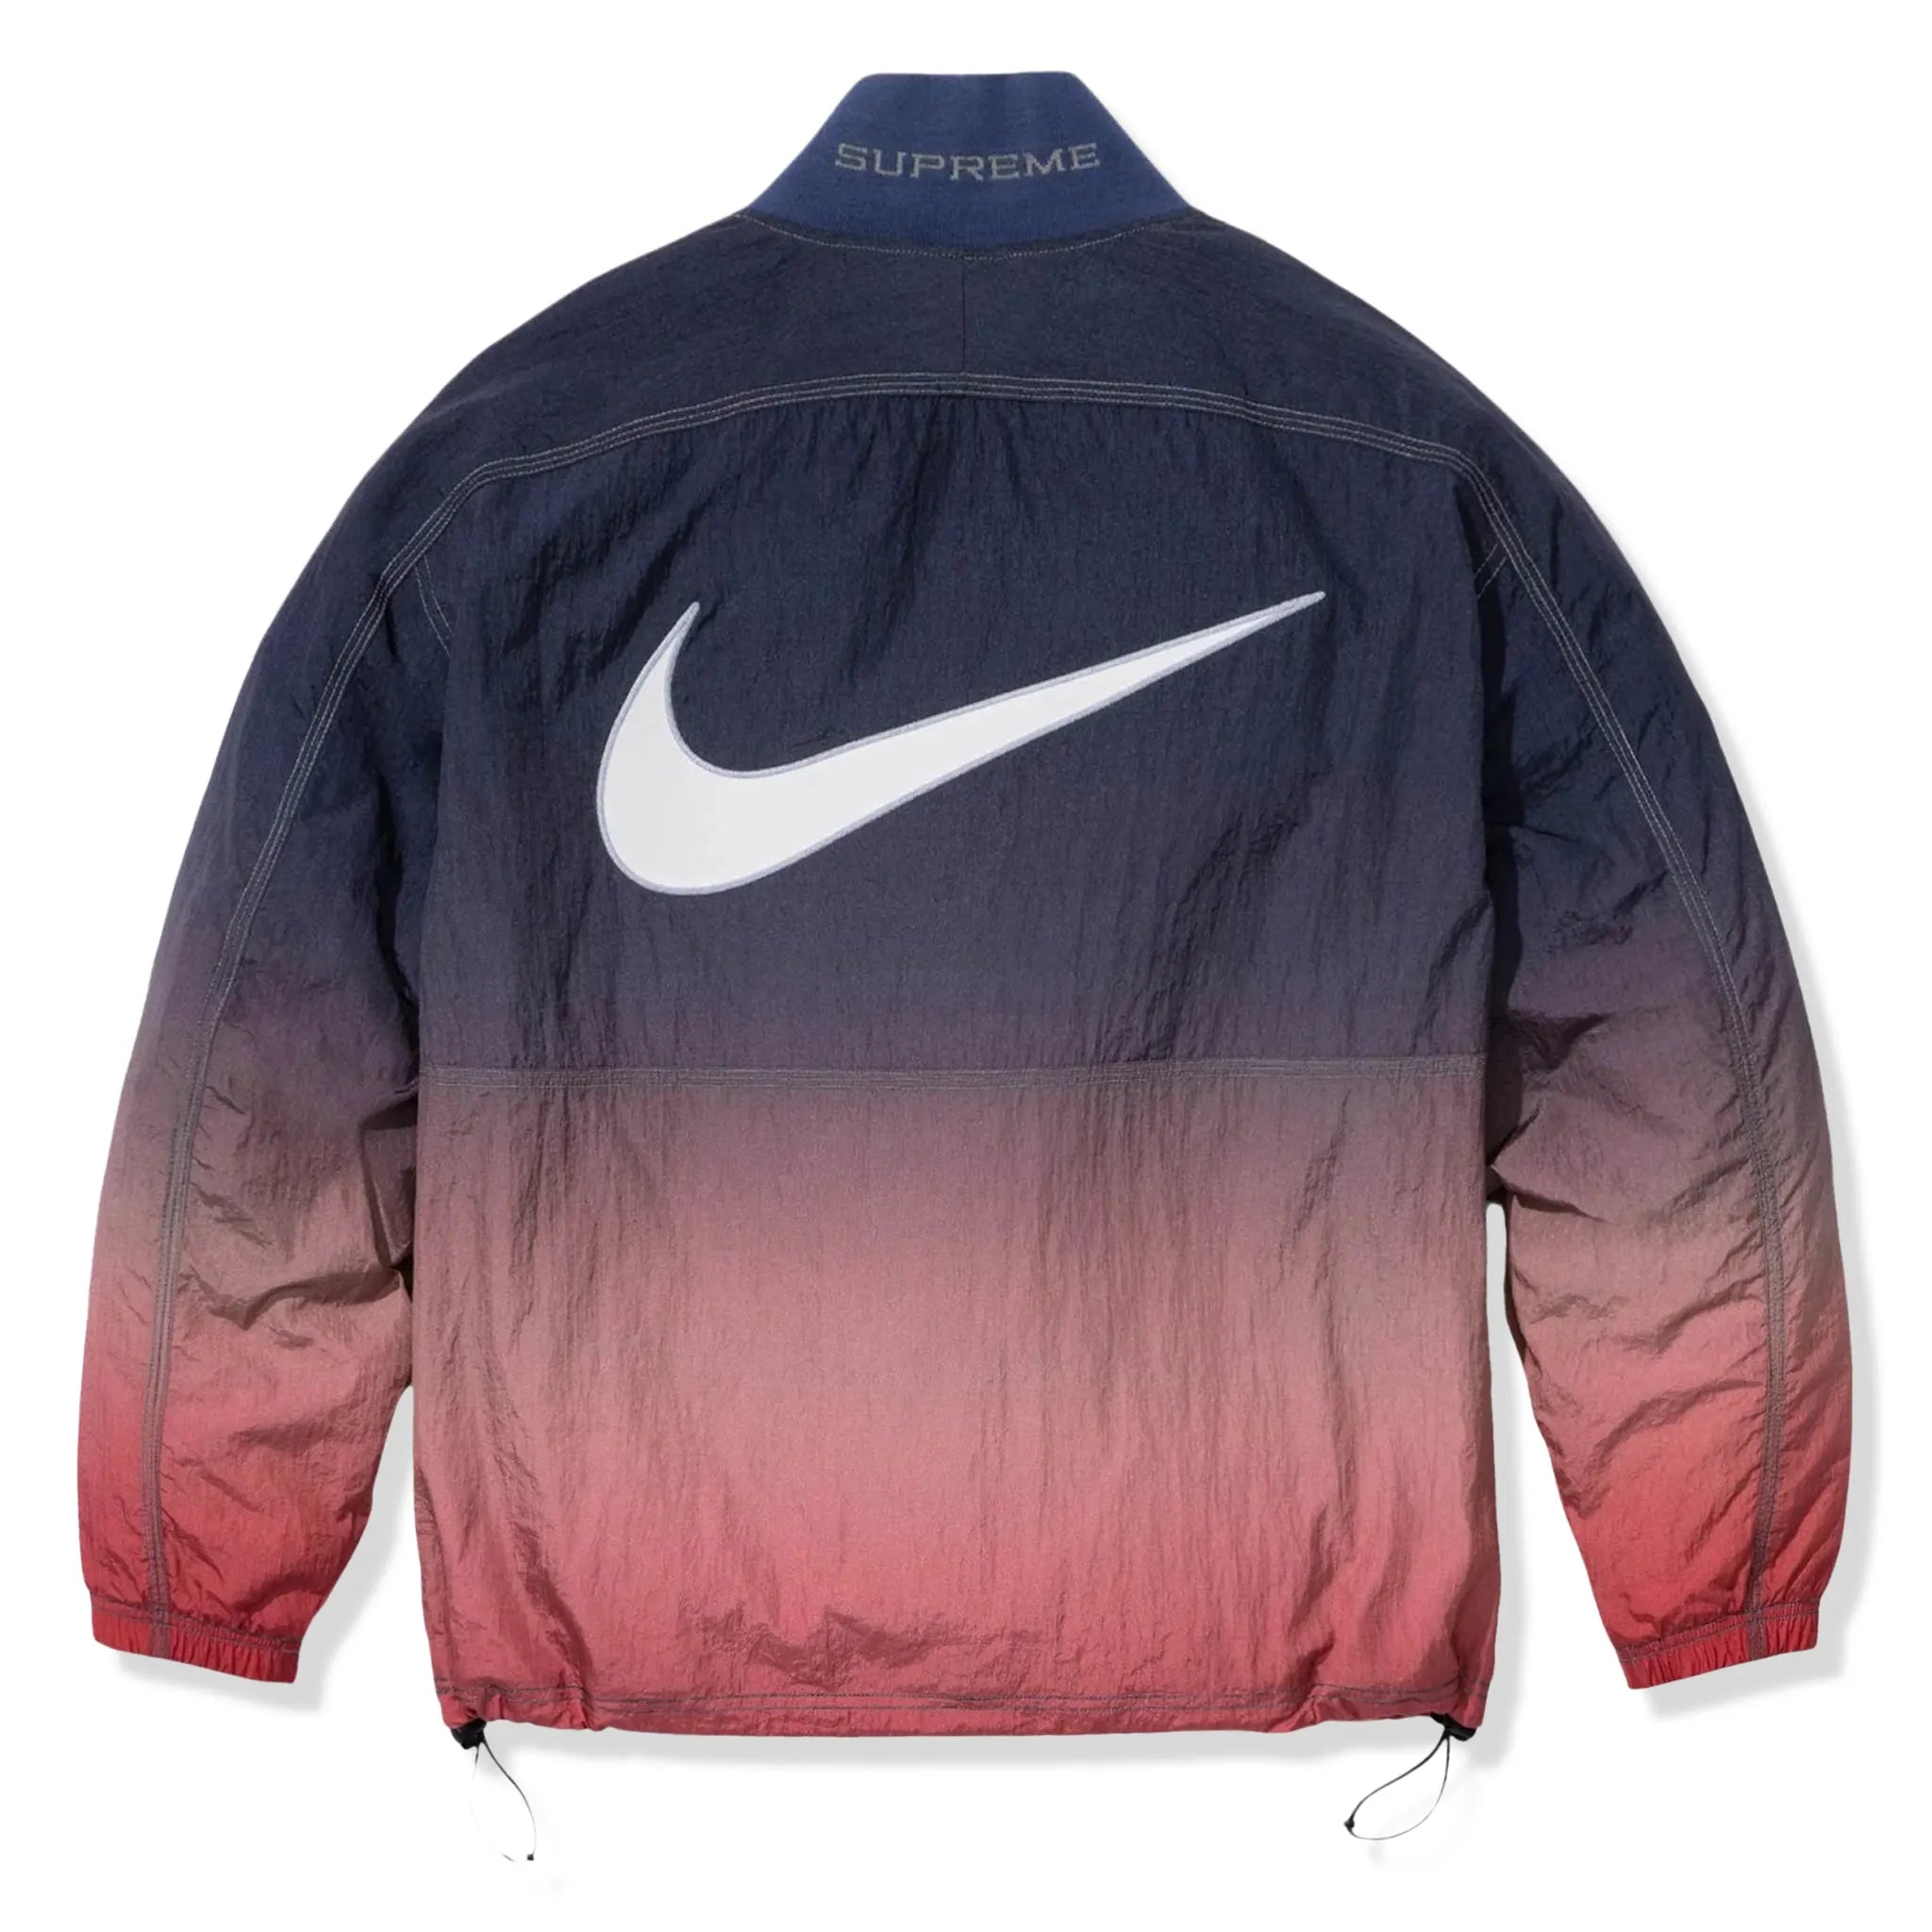 Back view of Nike Supreme Ripstop Multi Color Pullover